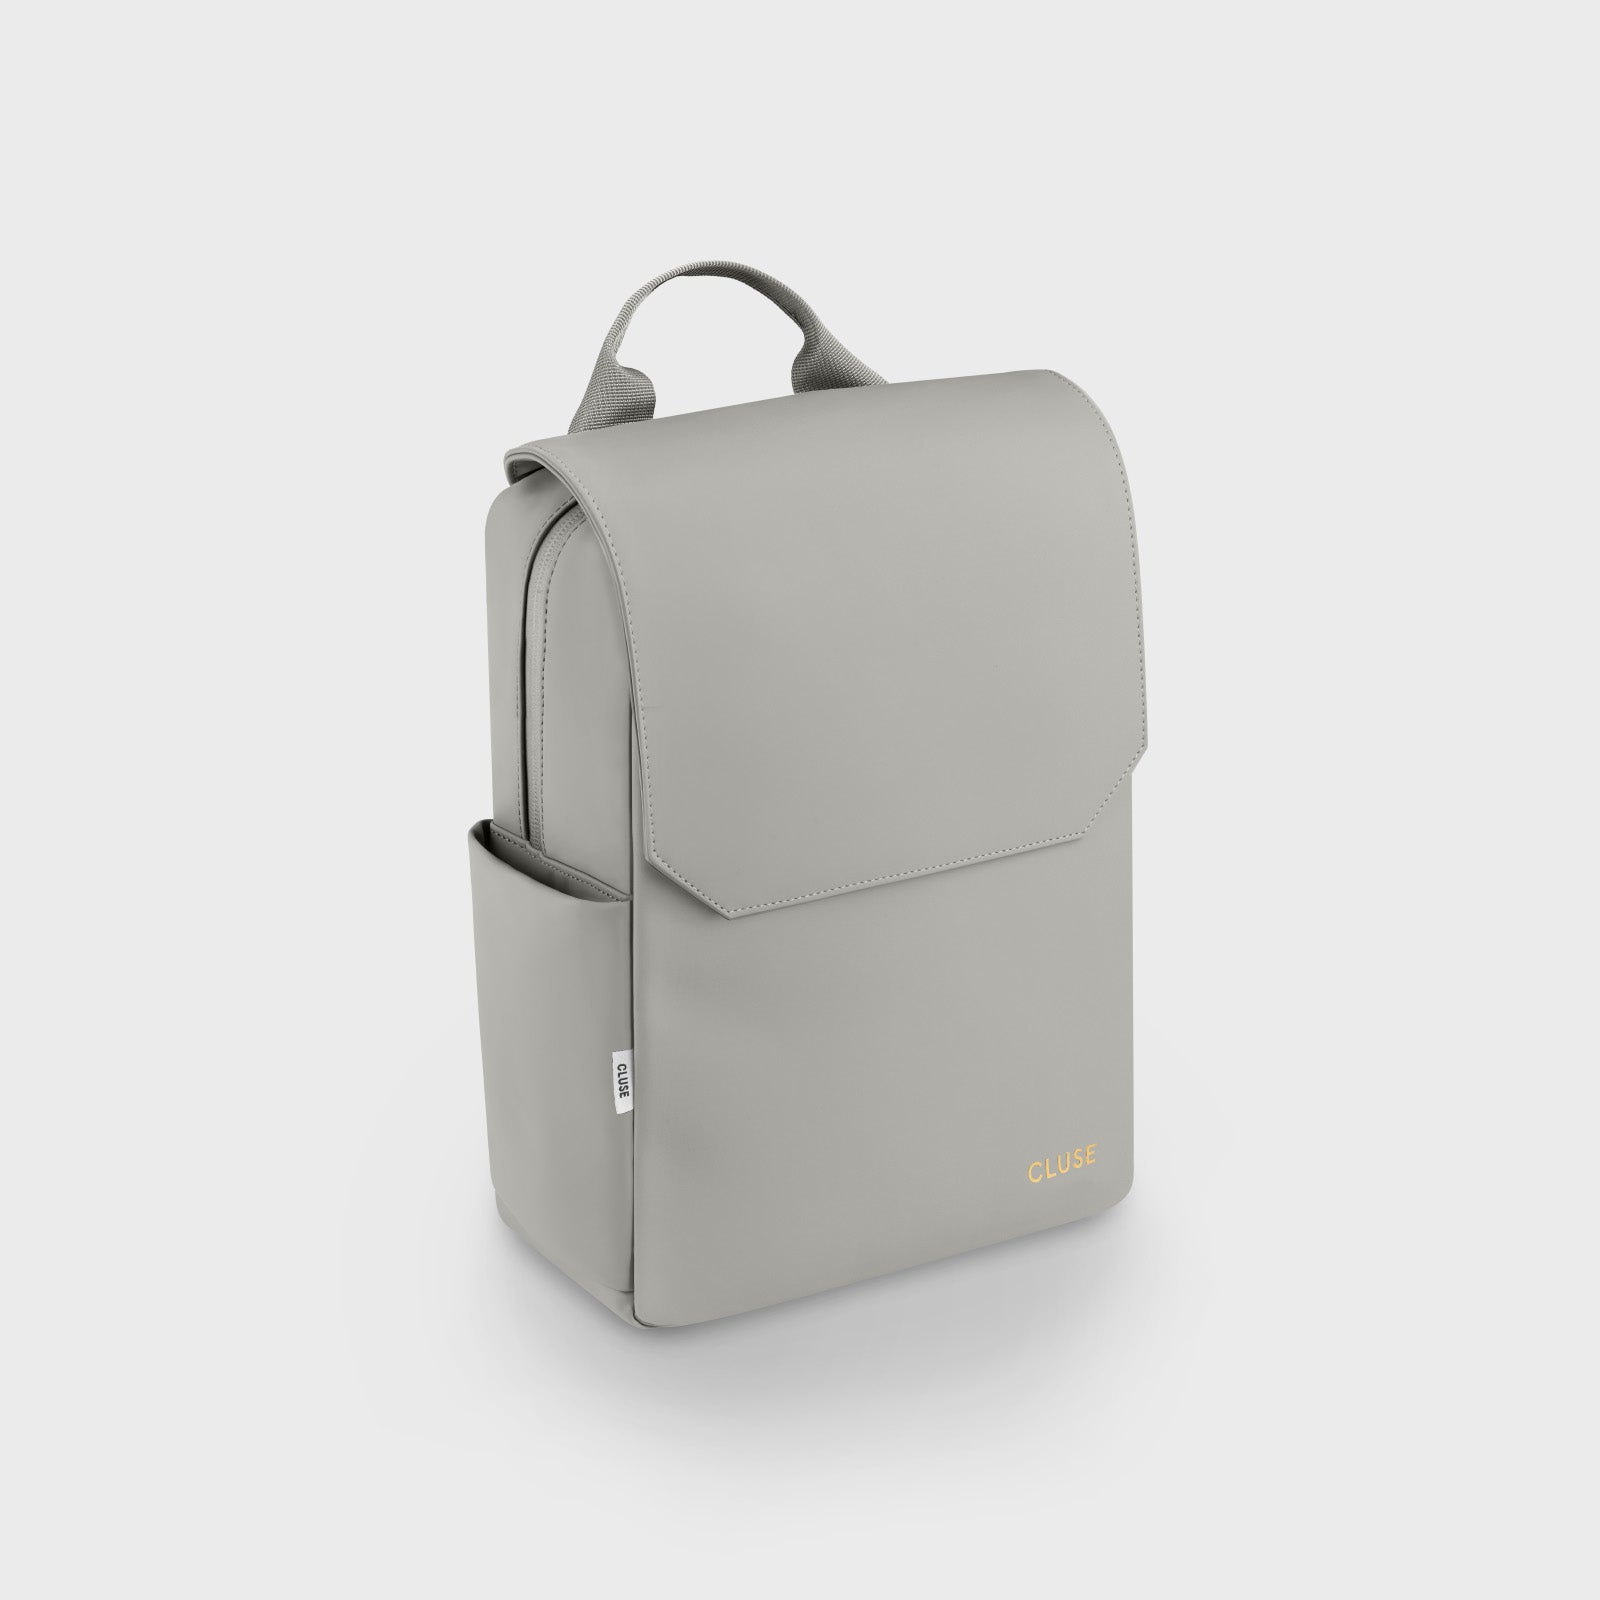 Neo Classic Mini leather tote bag in grey - Balenciaga | Mytheresa